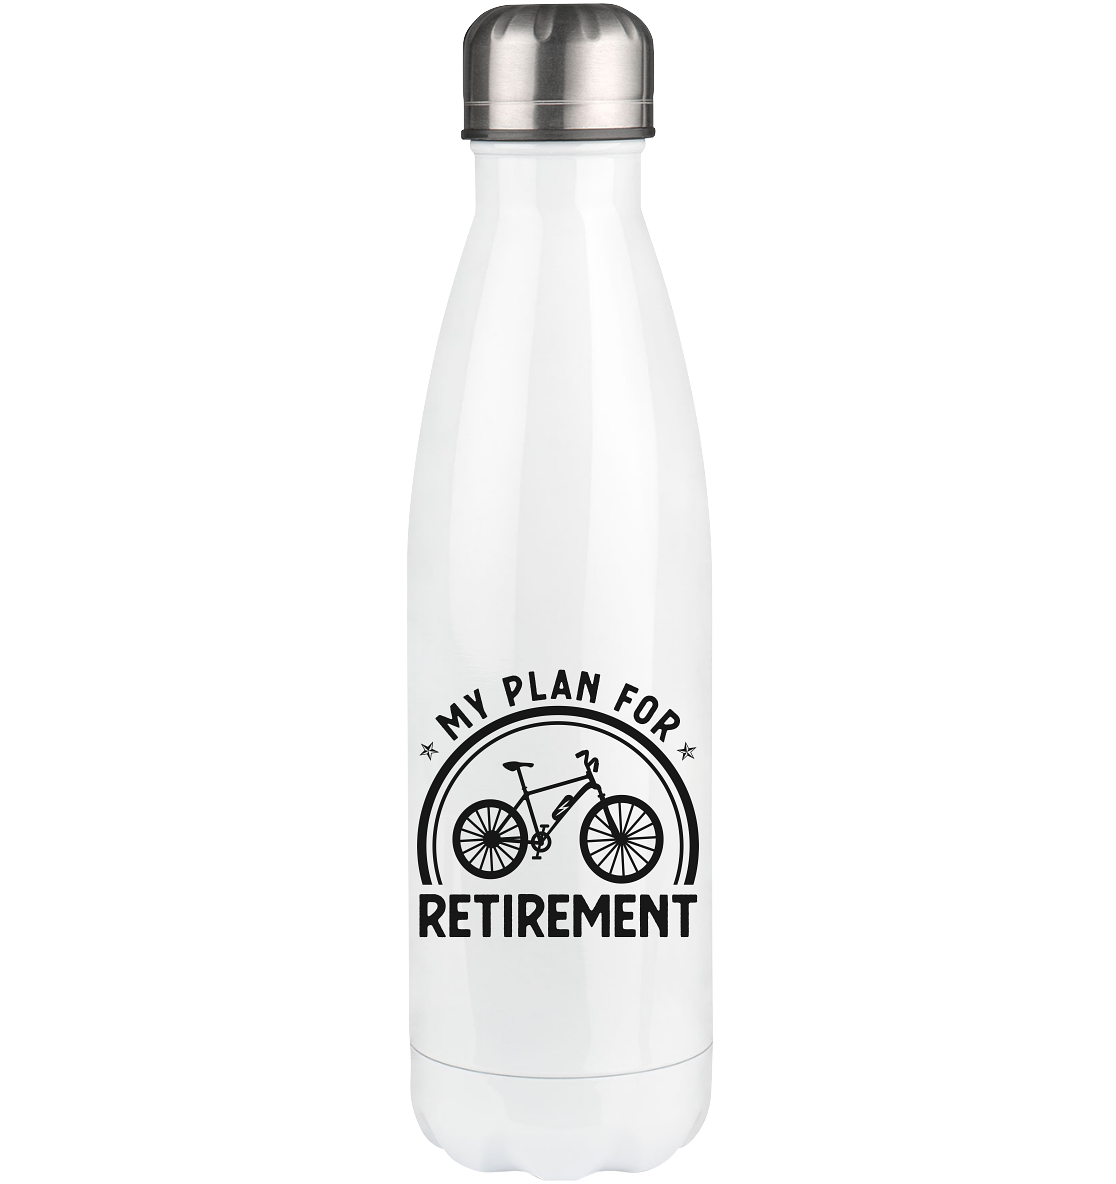 My Plan For Retirement - Edelstahl Thermosflasche e-bike 500ml